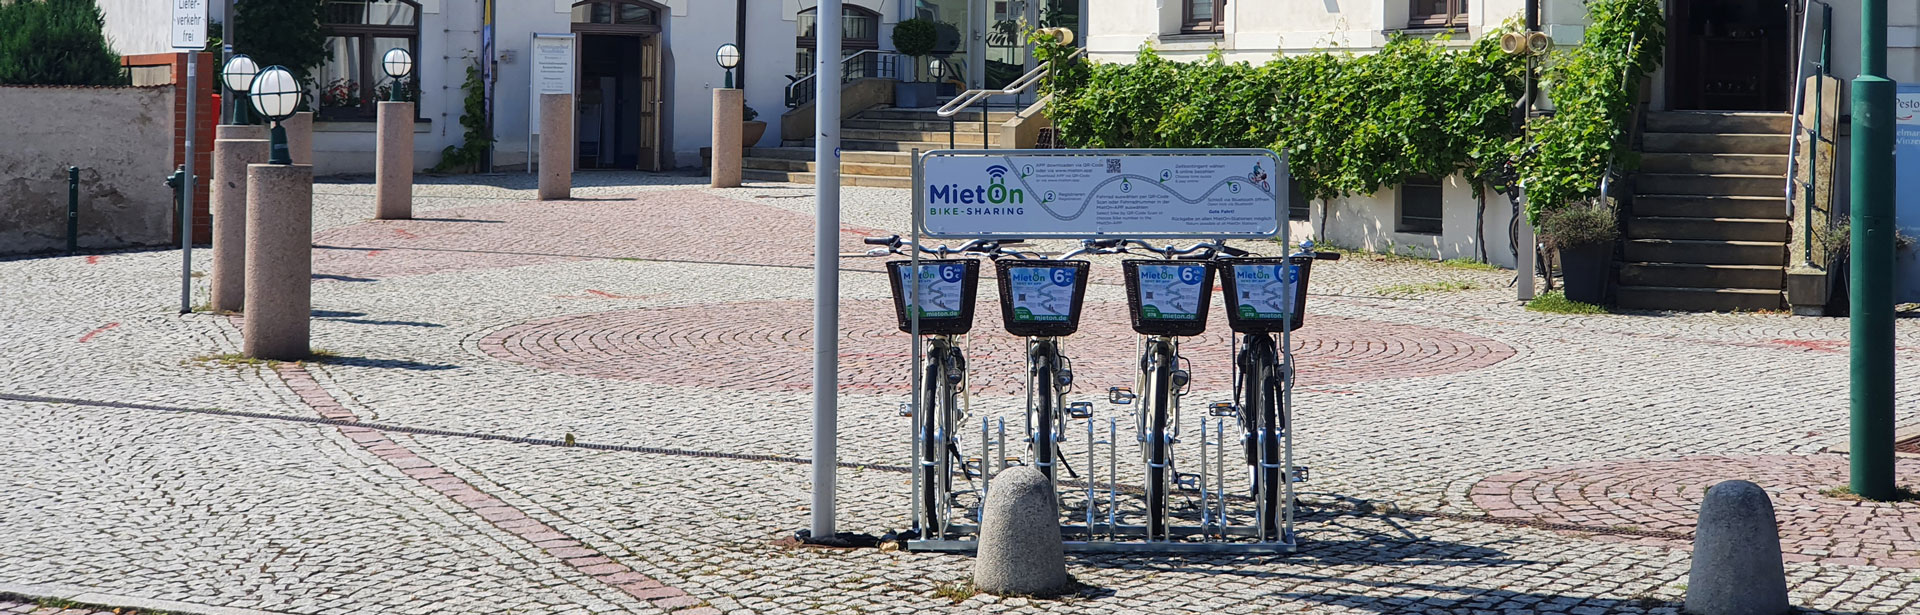 mieton-bike-sharing-fahrradverleih